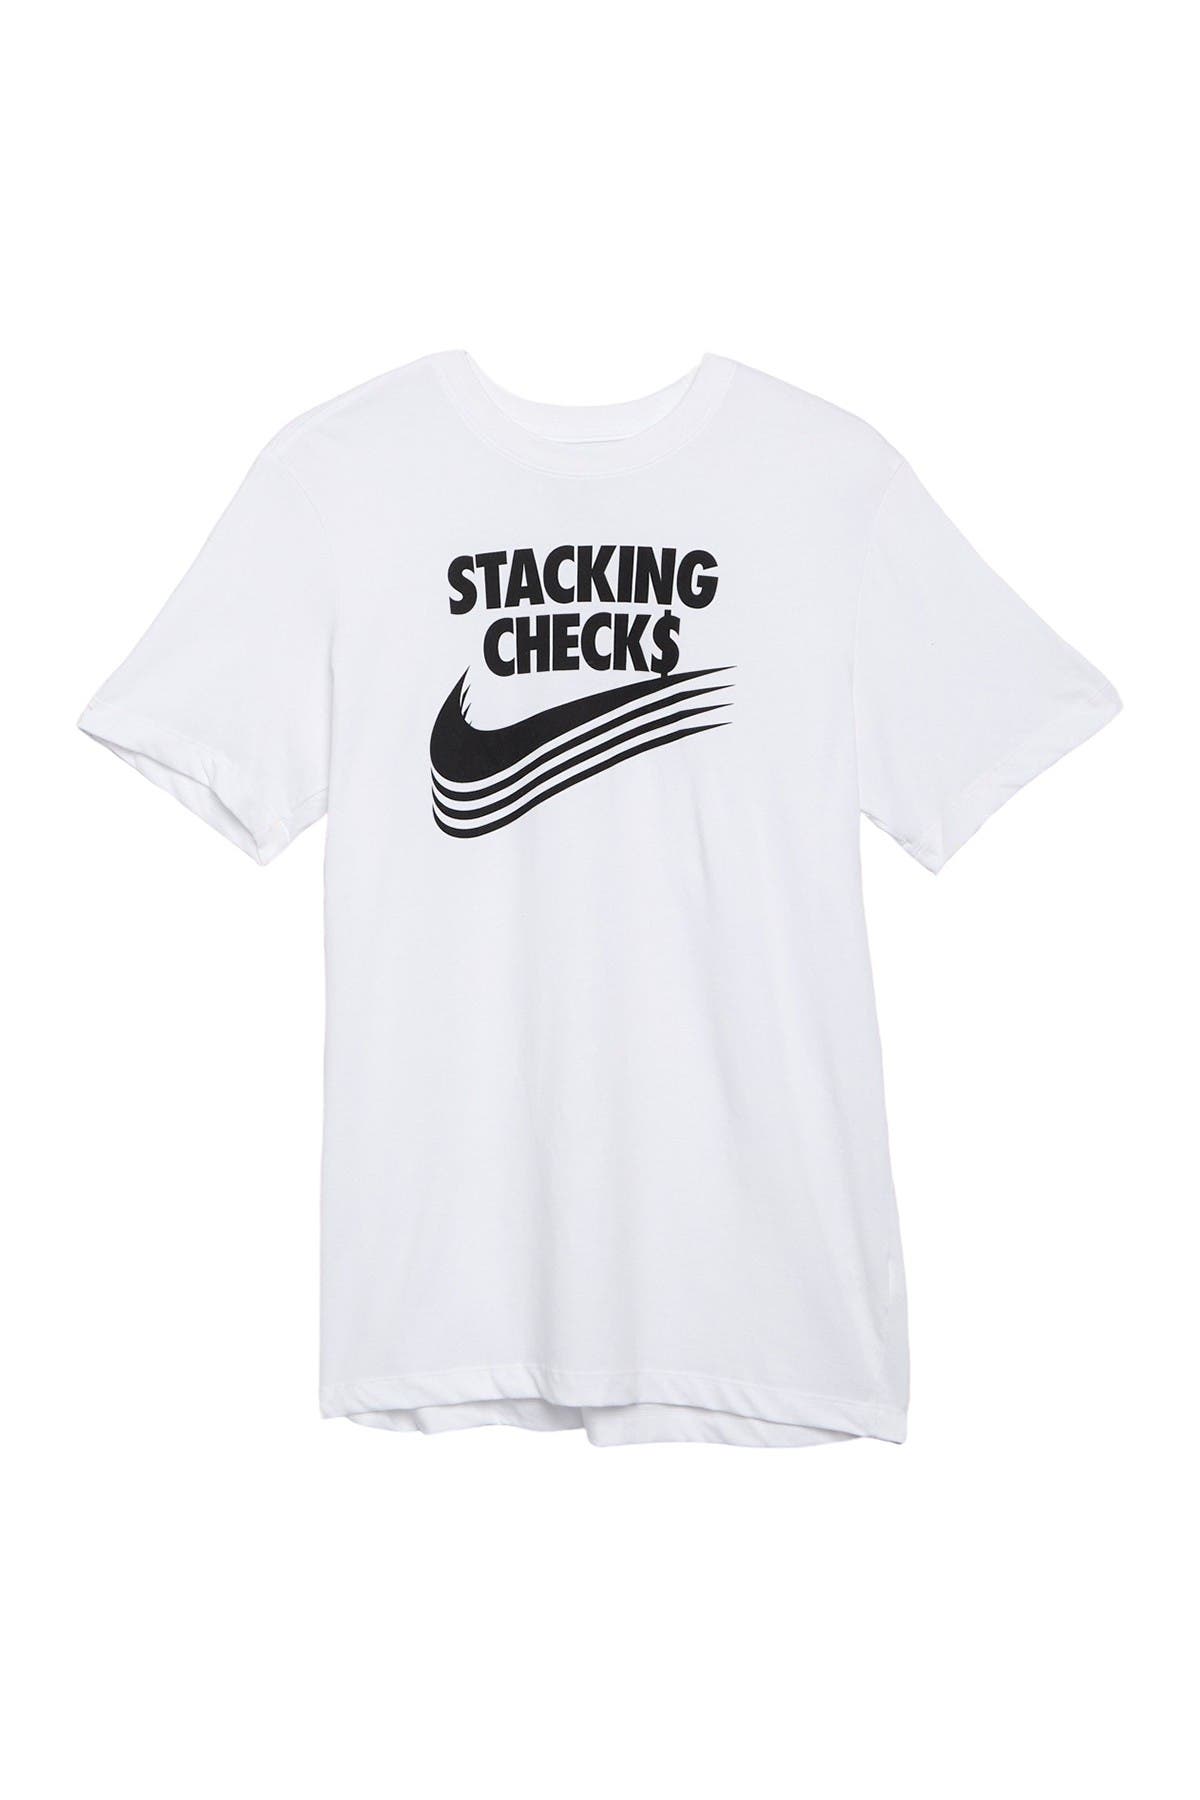 stacking checks nike shirt